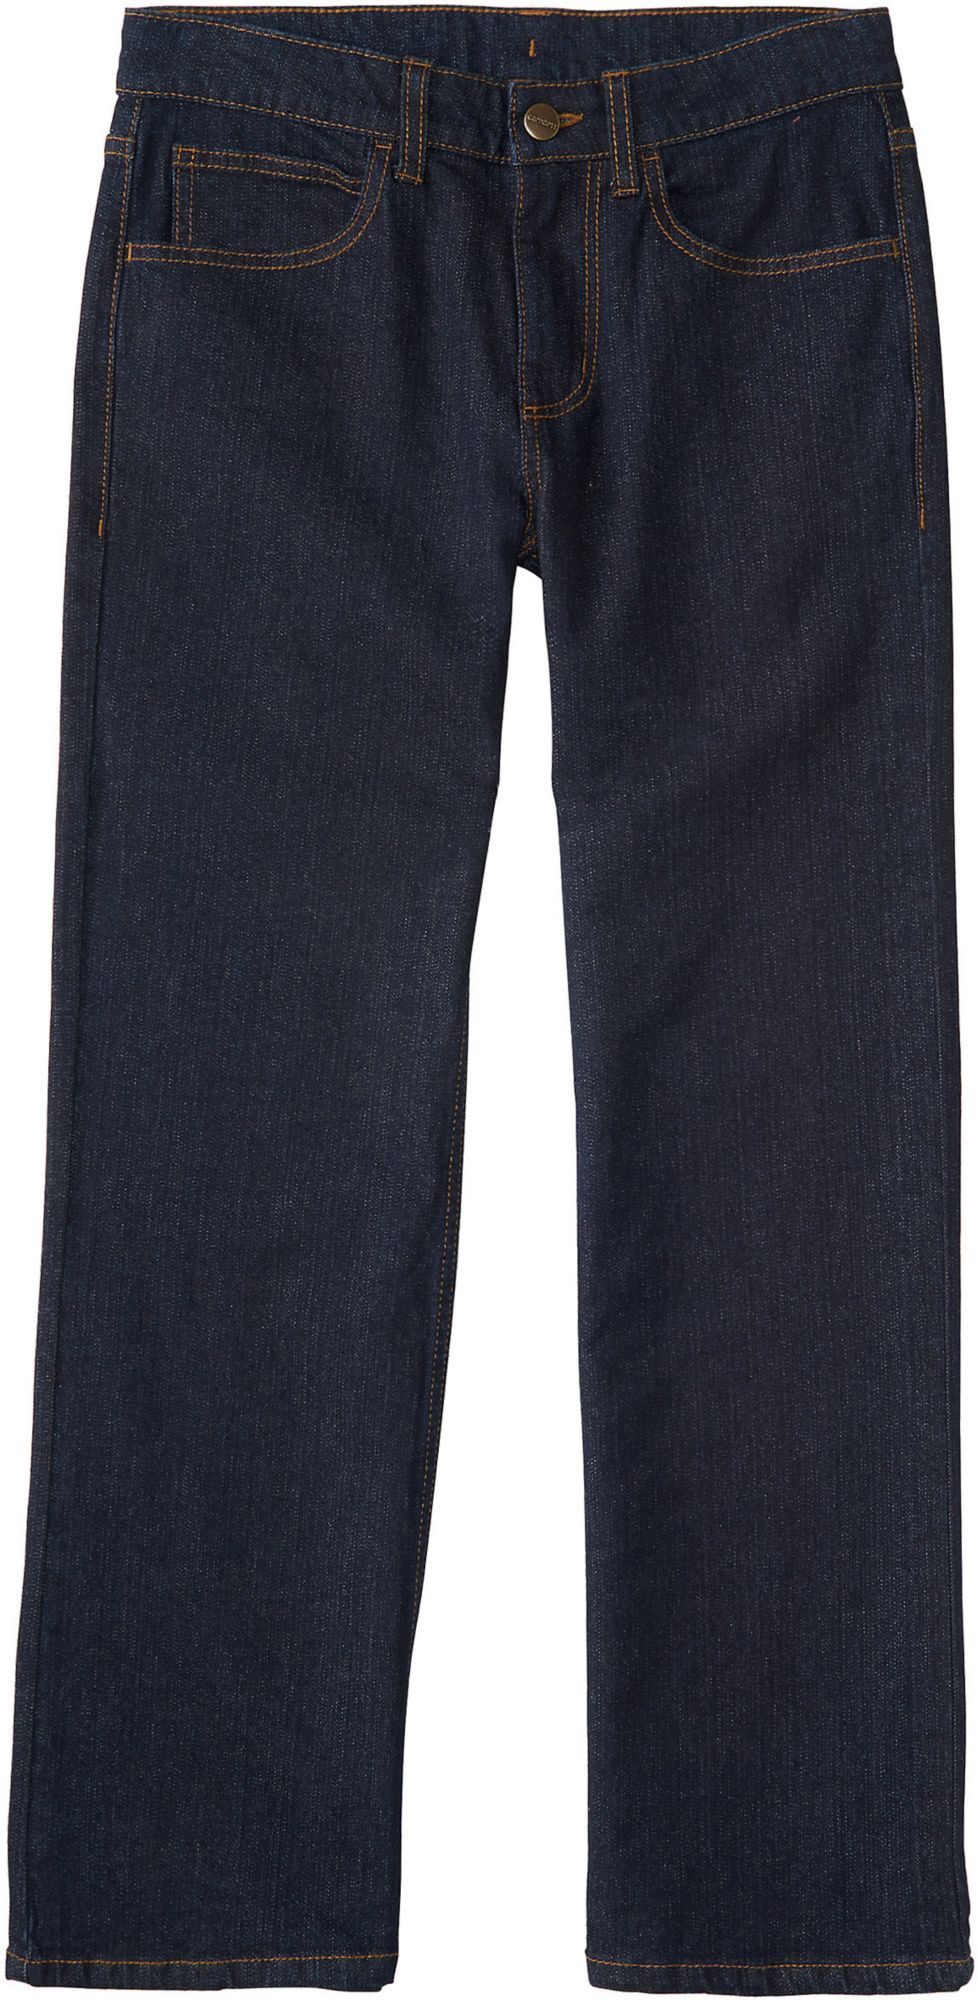 Boys Carhartt Rugged Pocket Bootcut Jeans